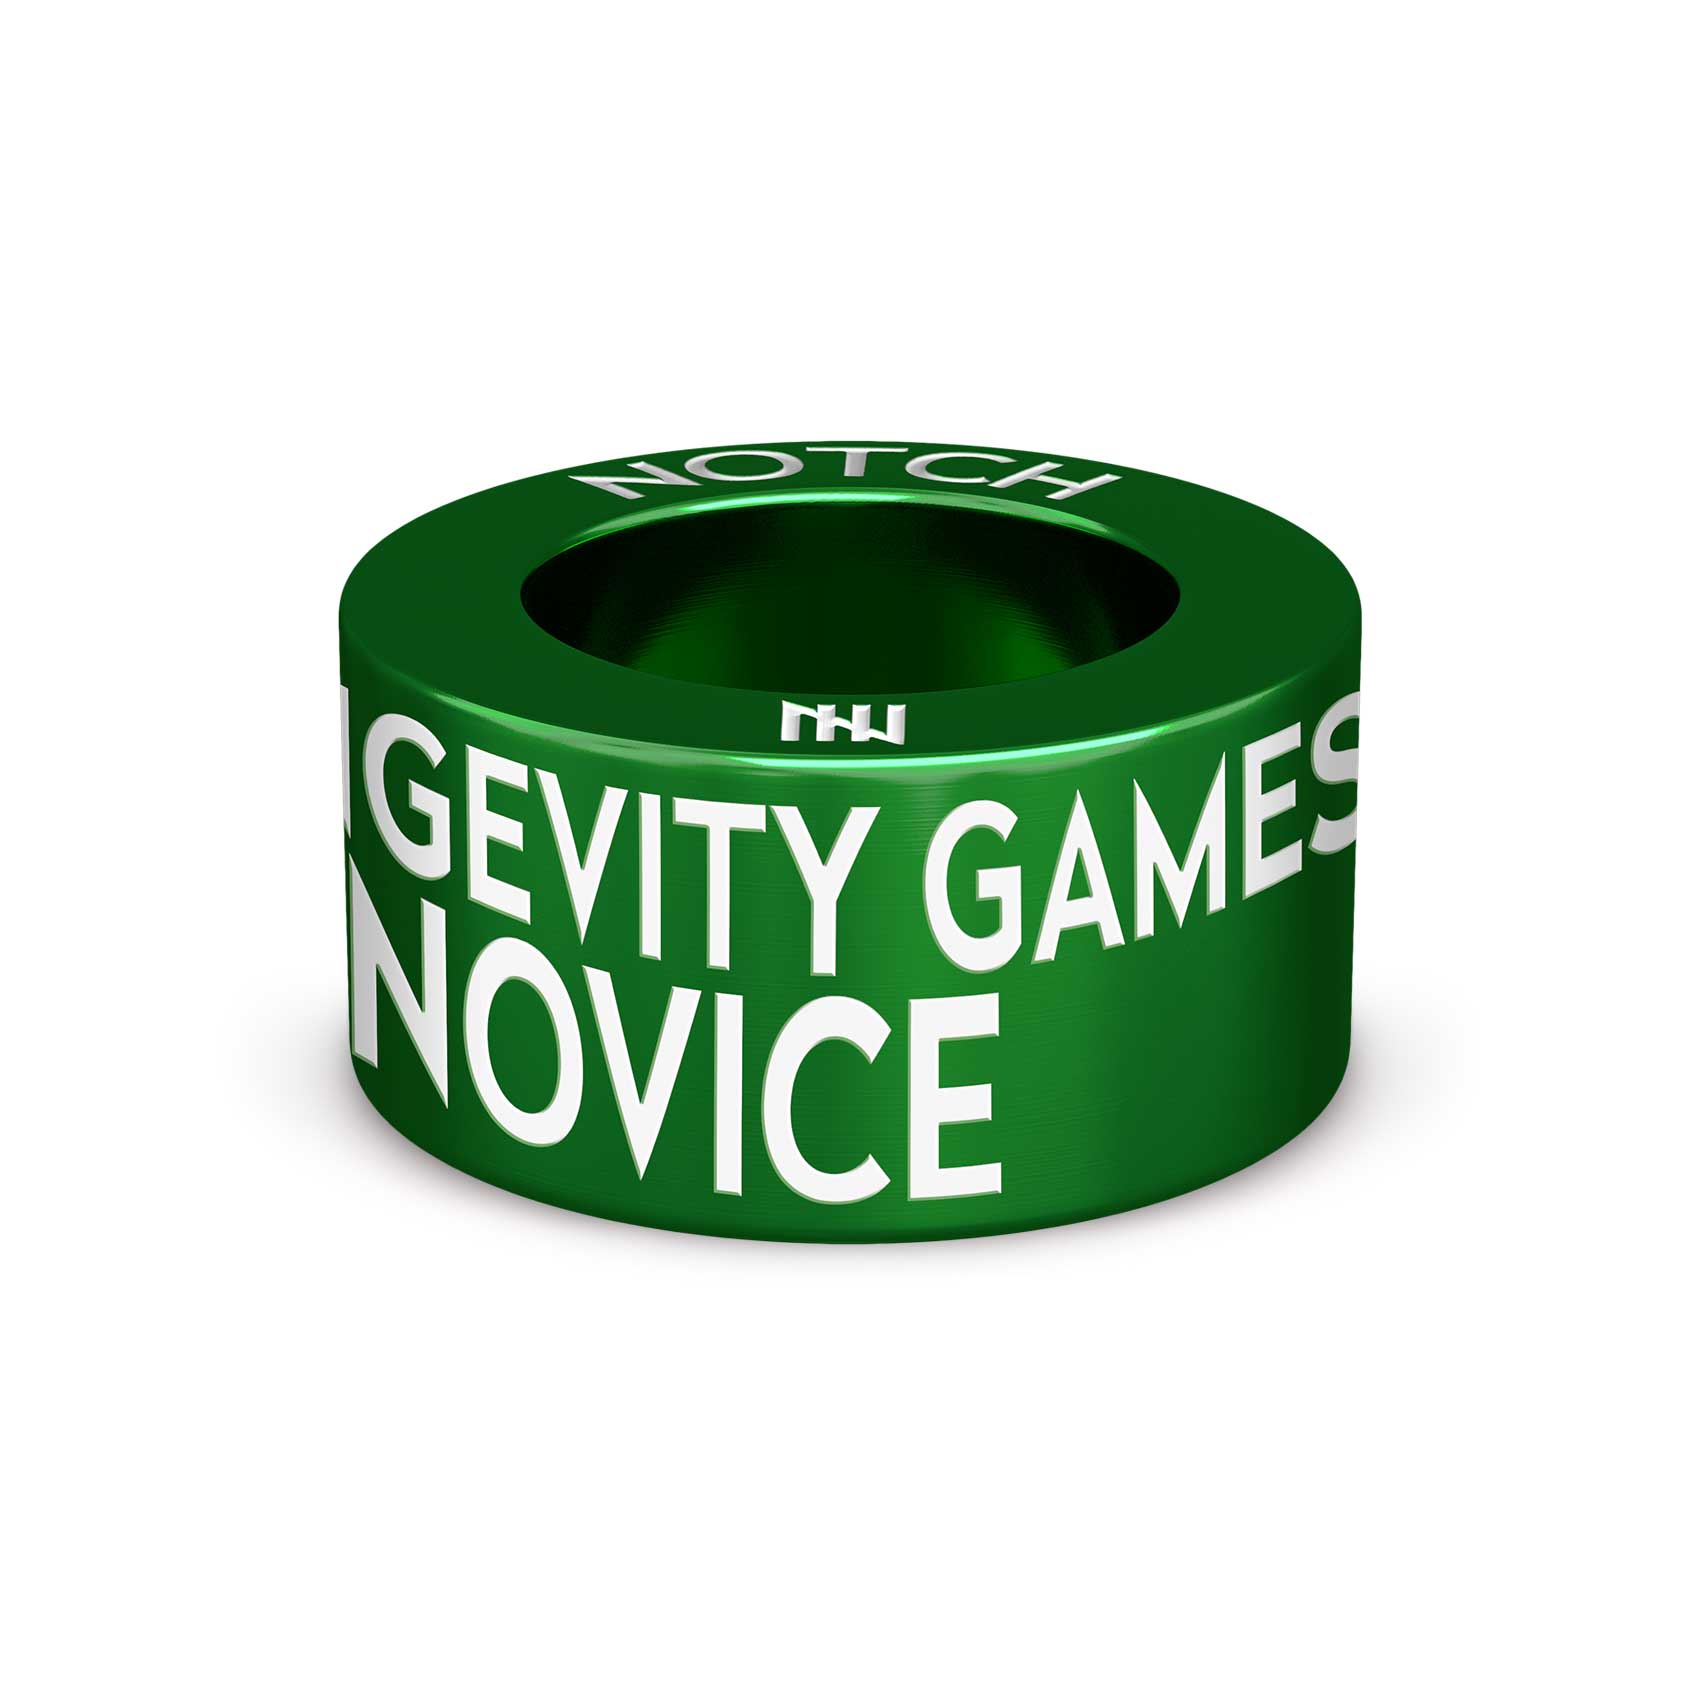 Longevity Games Novice NOTCH Charm